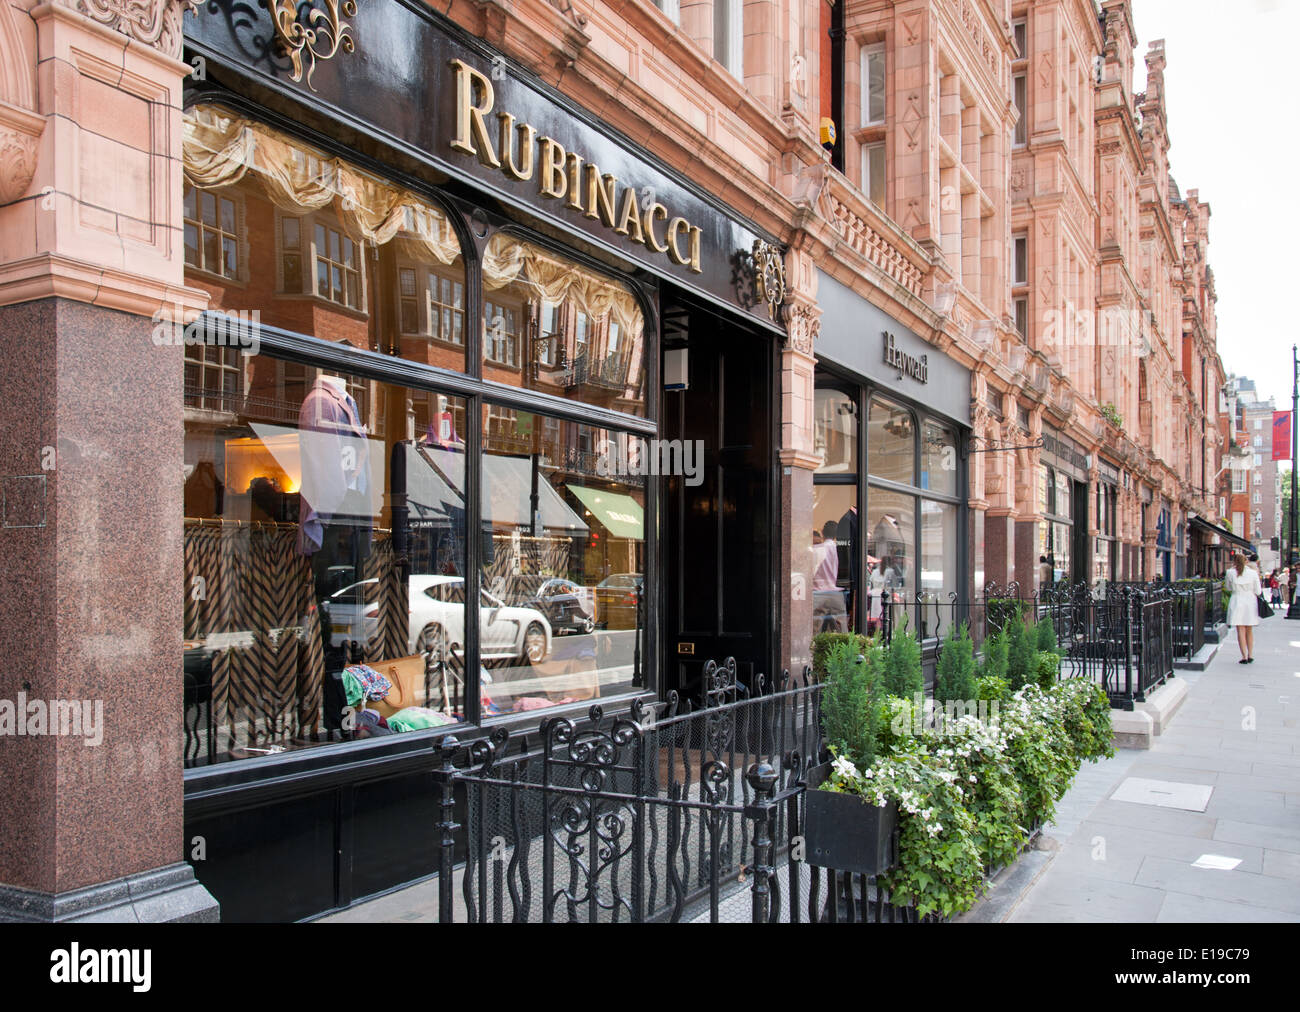 Rubinacci on Mount Street in Mayfair, London, UK Stock Photo